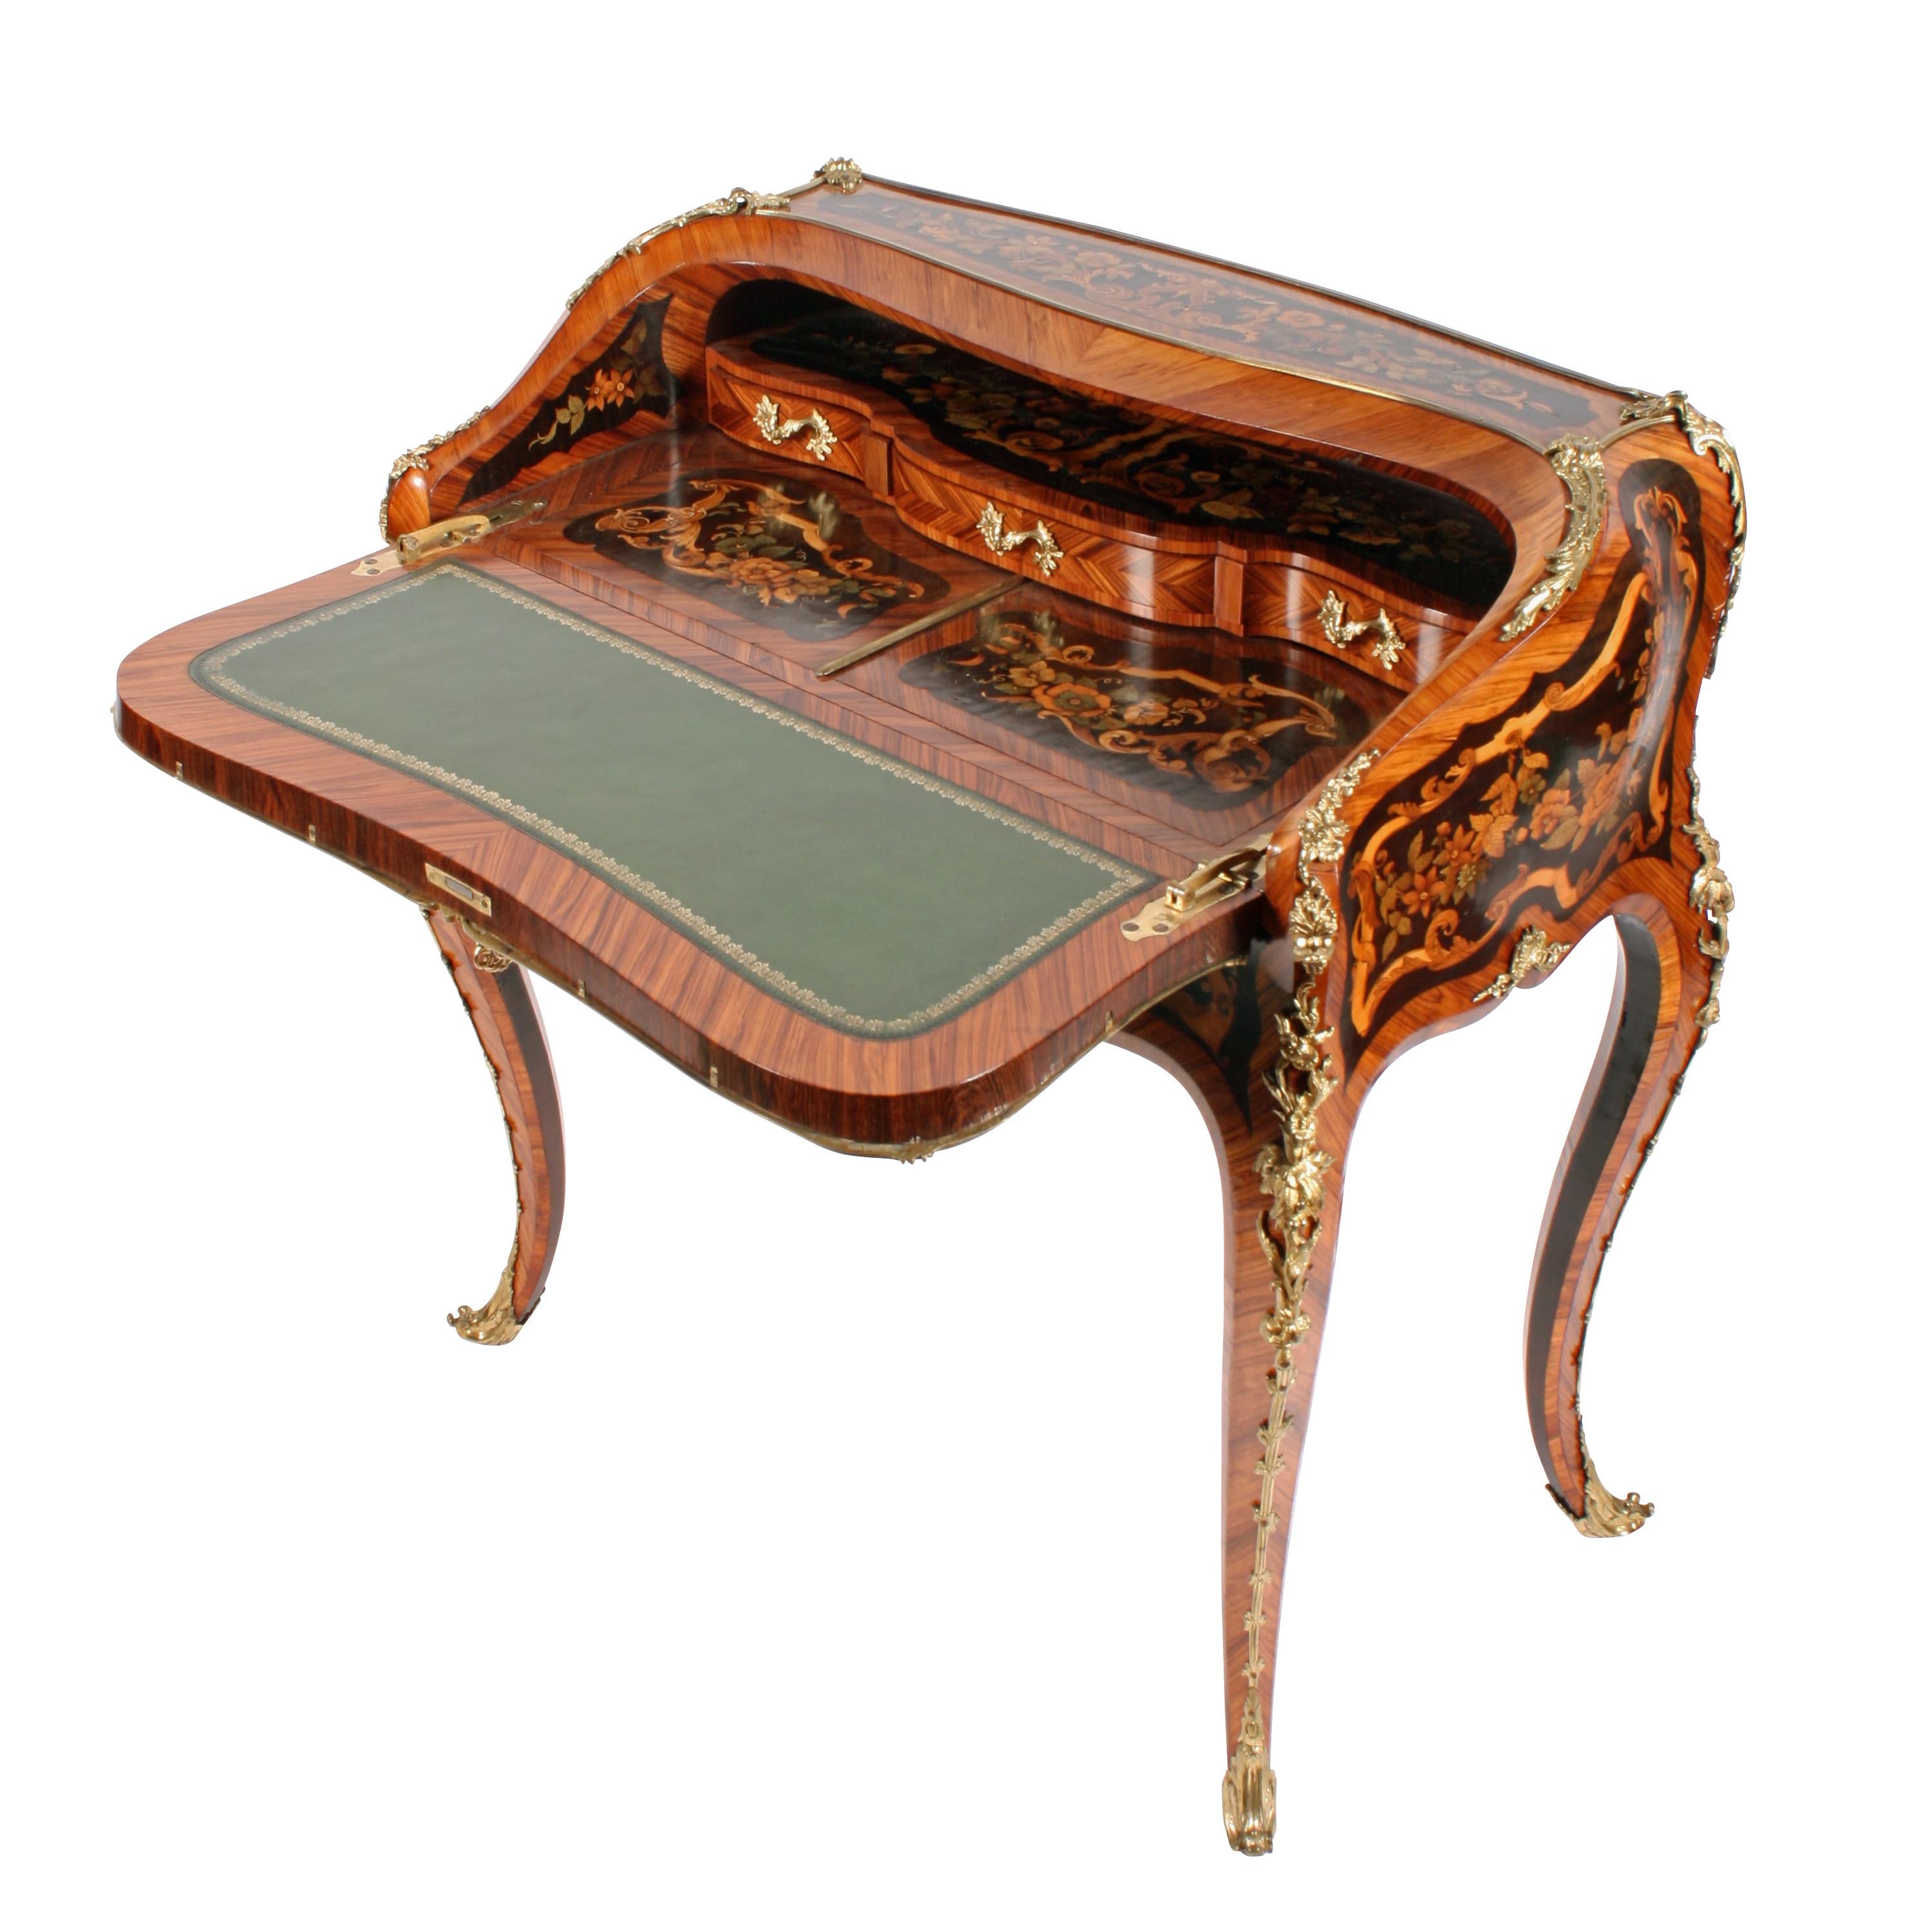 English Louis XV Style Marquetry Bureau en Pente For Sale